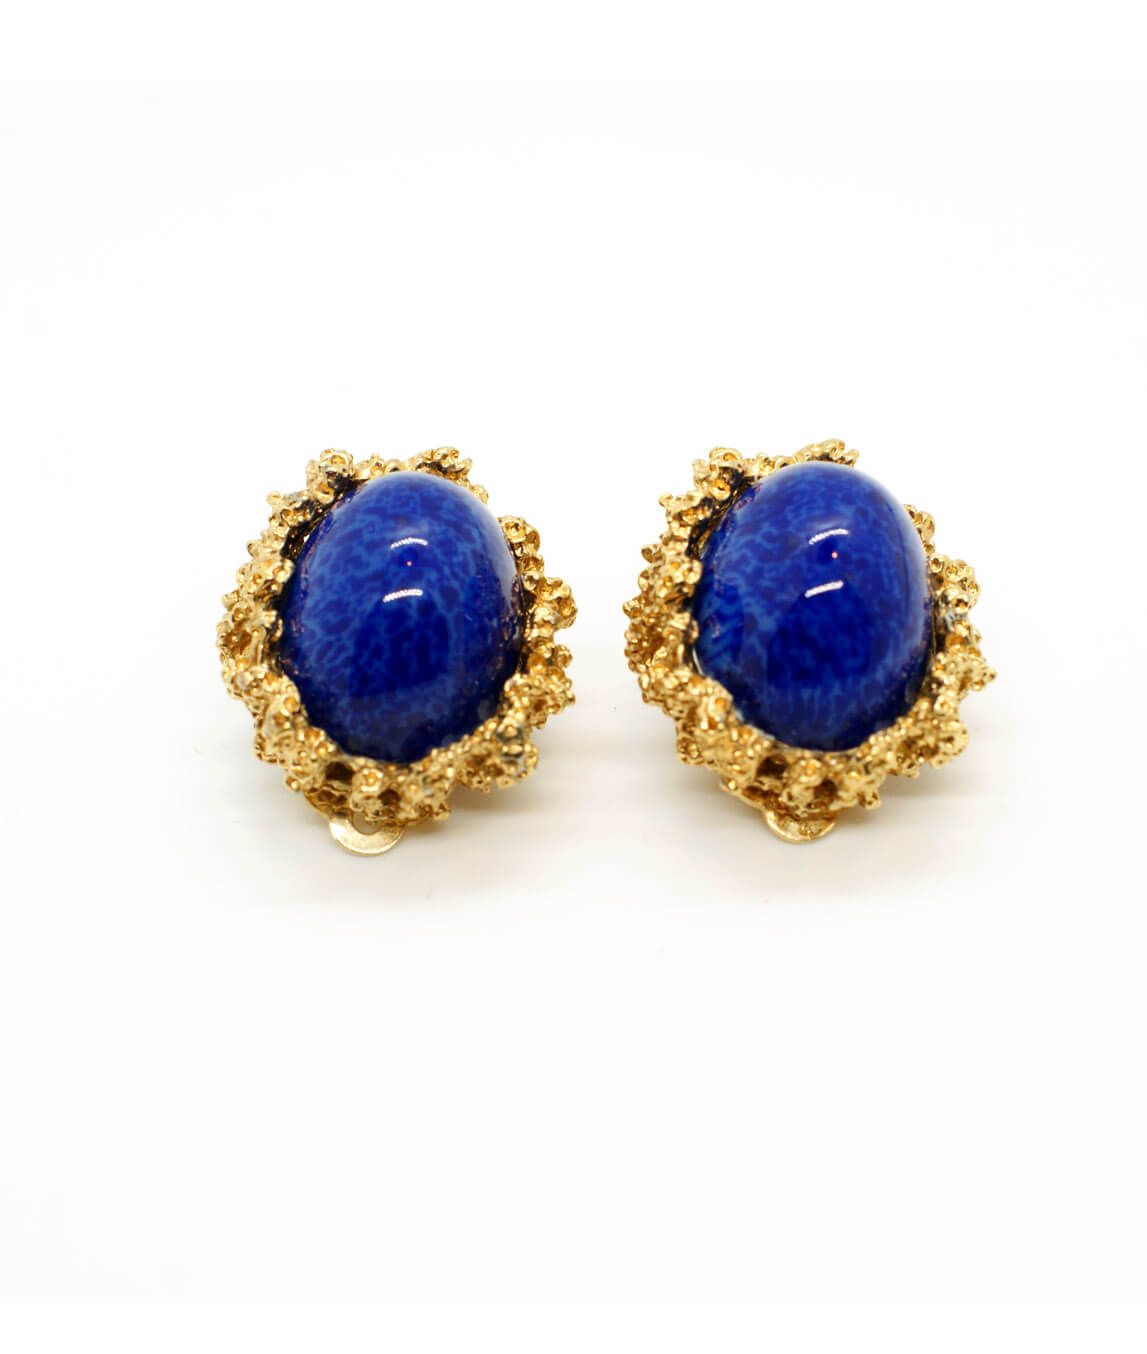 Vintage Panetta Lapis Lazuli Earrings | Gadelles Vintage